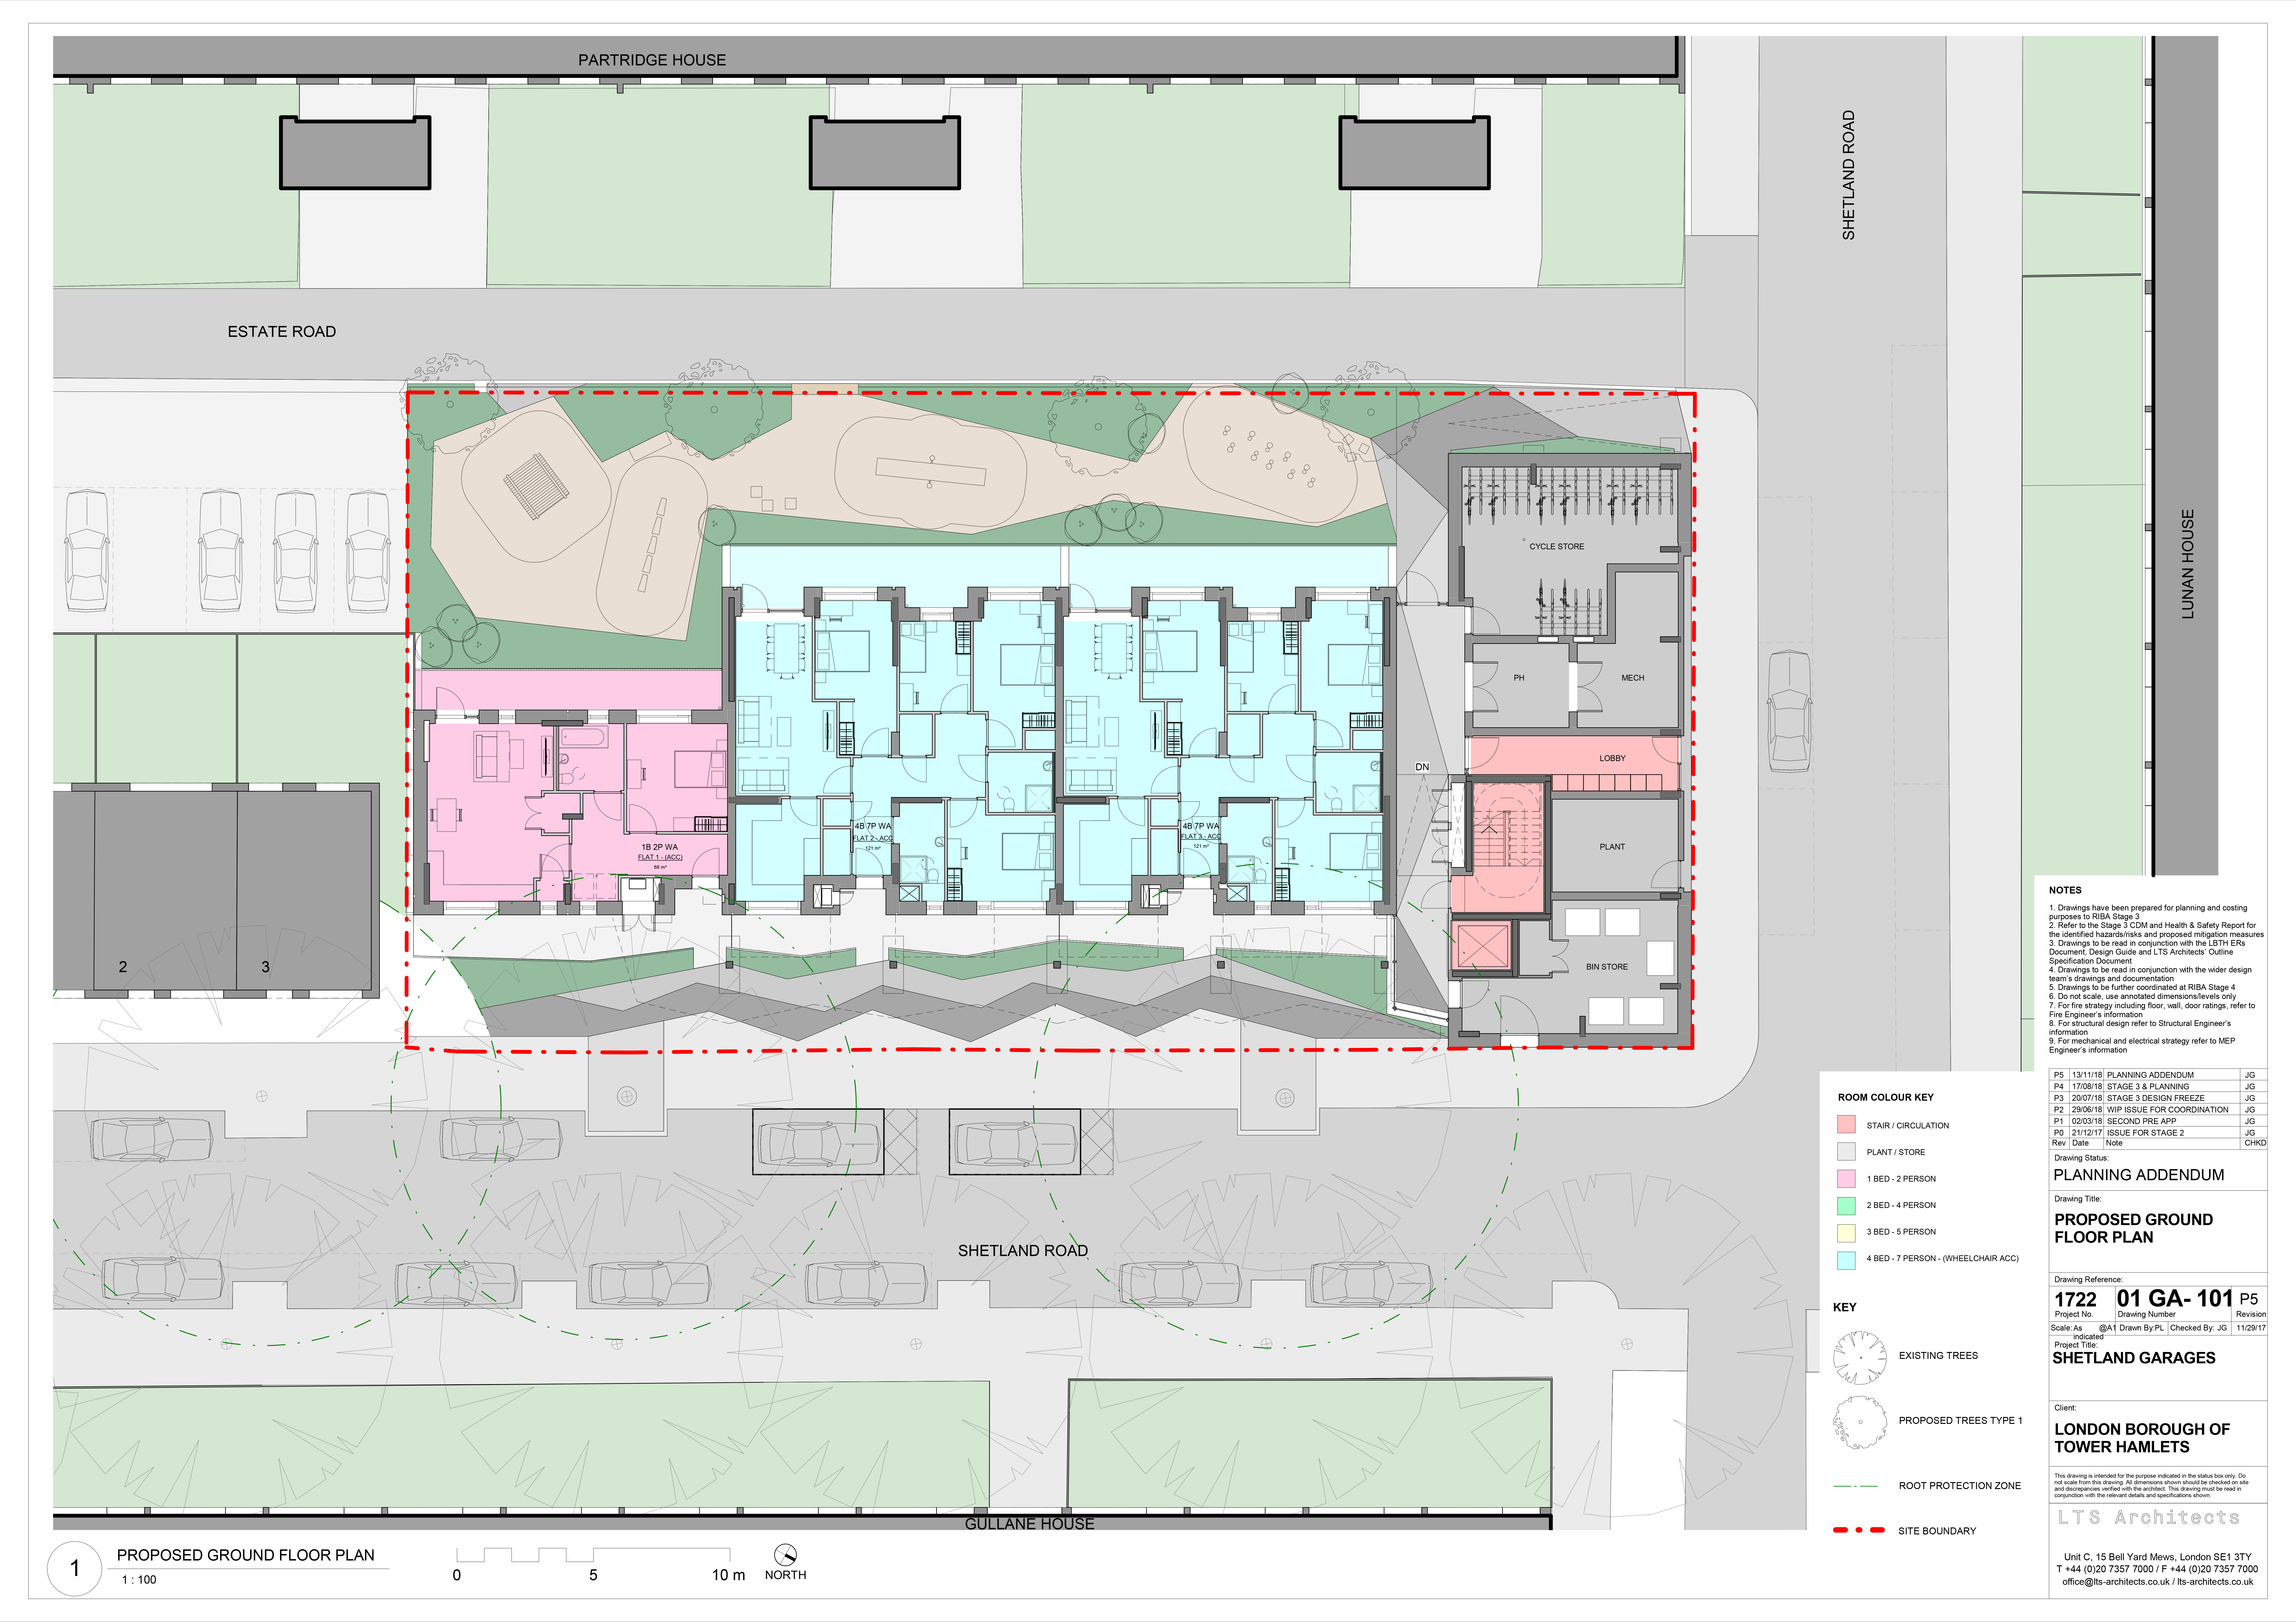 Ground Floor Plan shetland garages tower hamlets lts architects planning permisson granted